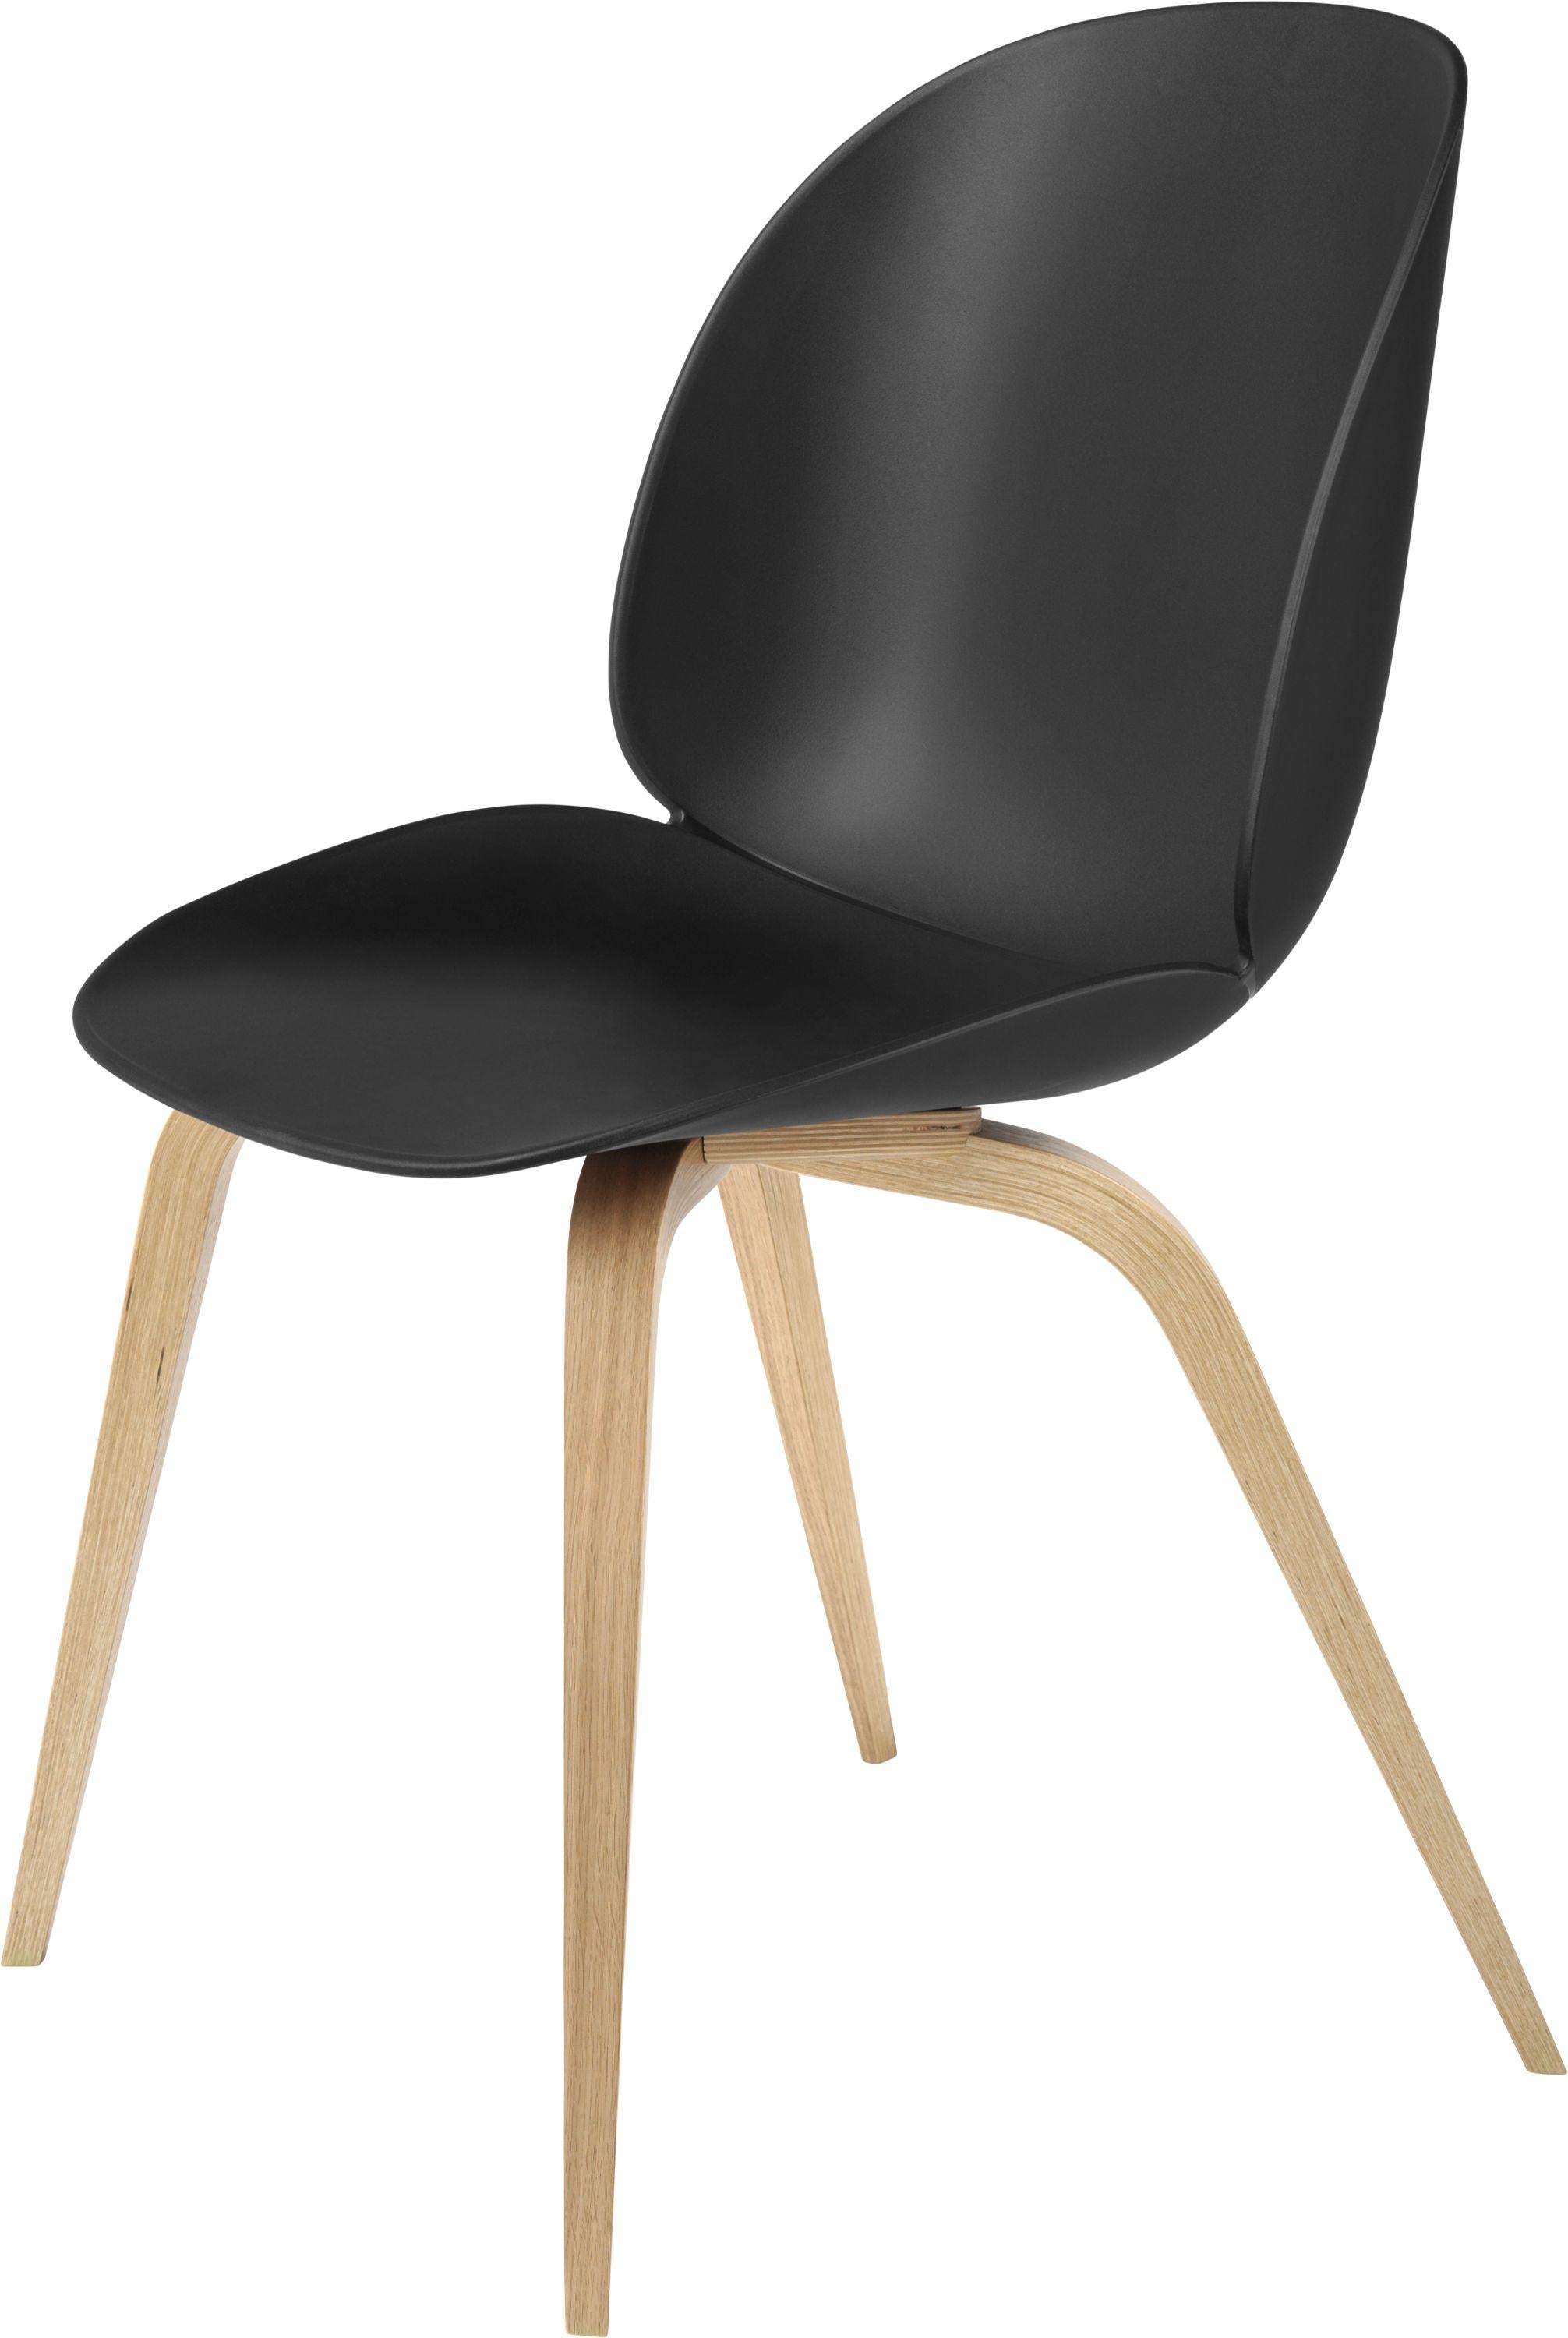 GamFratesi 'Beetle' Dining Chair with Oak Conic Base 2